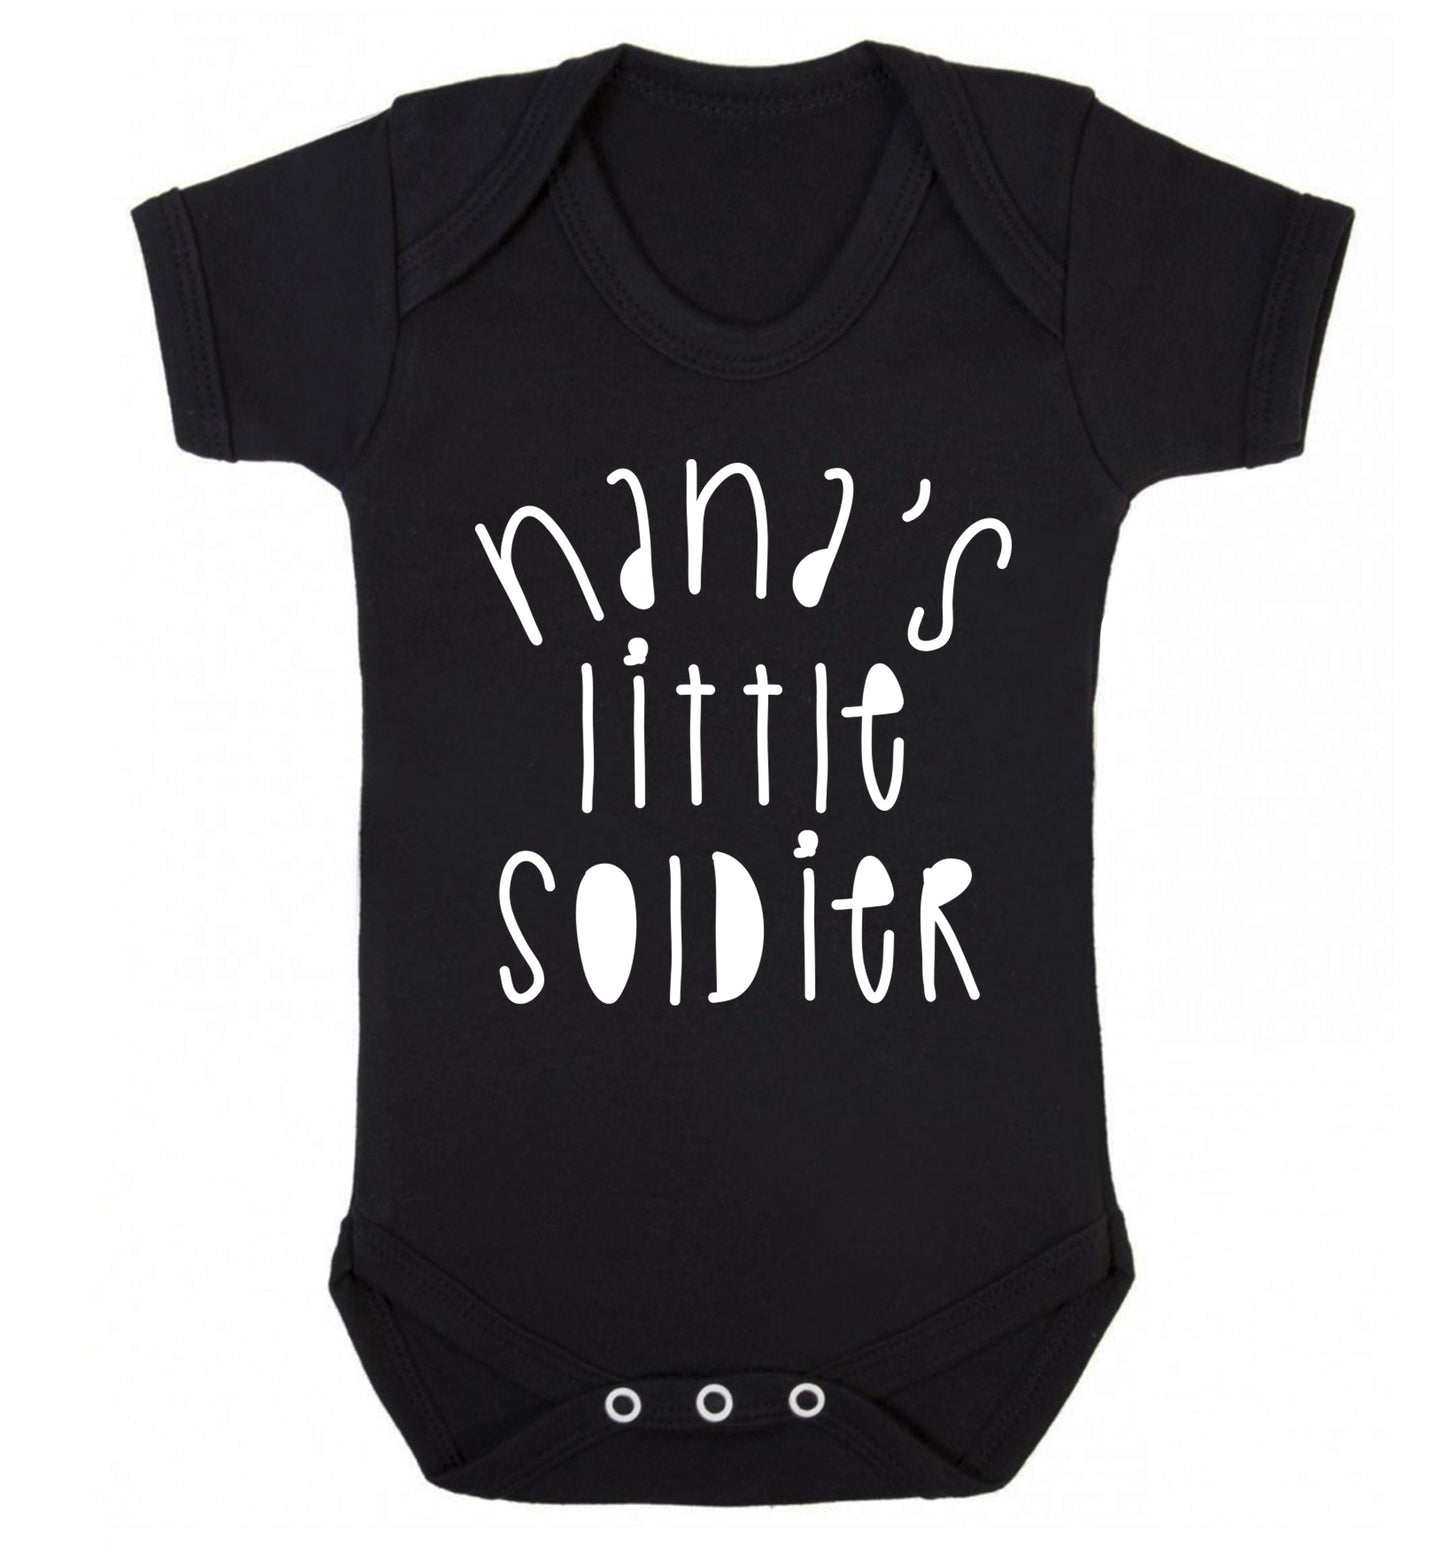 Nana's little soldier Baby Vest black 18-24 months